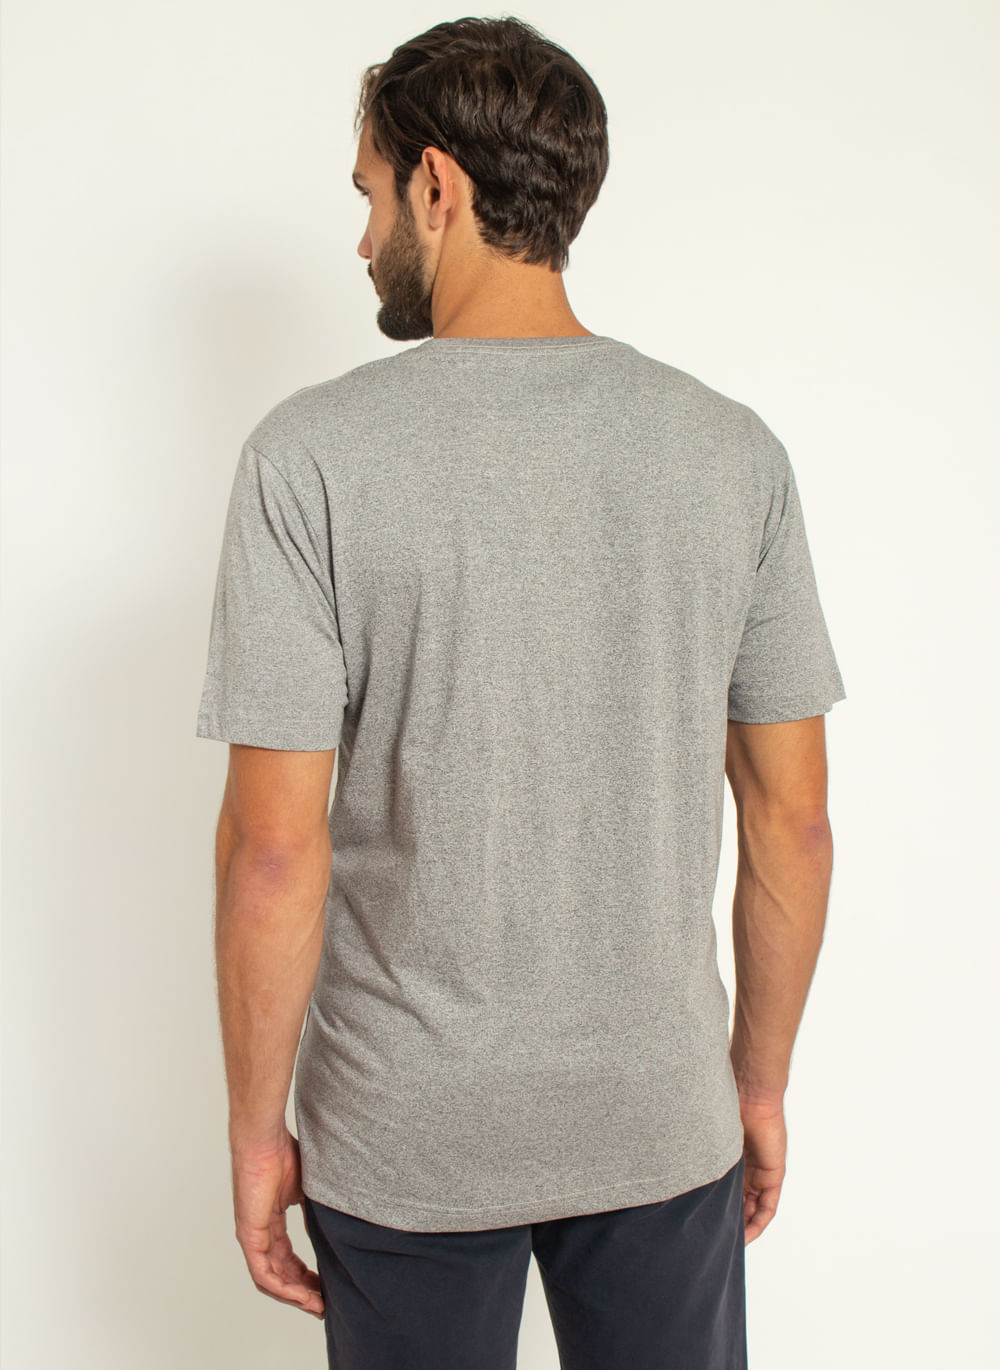 Camiseta-Aleatory-Motion-Jersey-Mescla-Cinza-Cinza-P